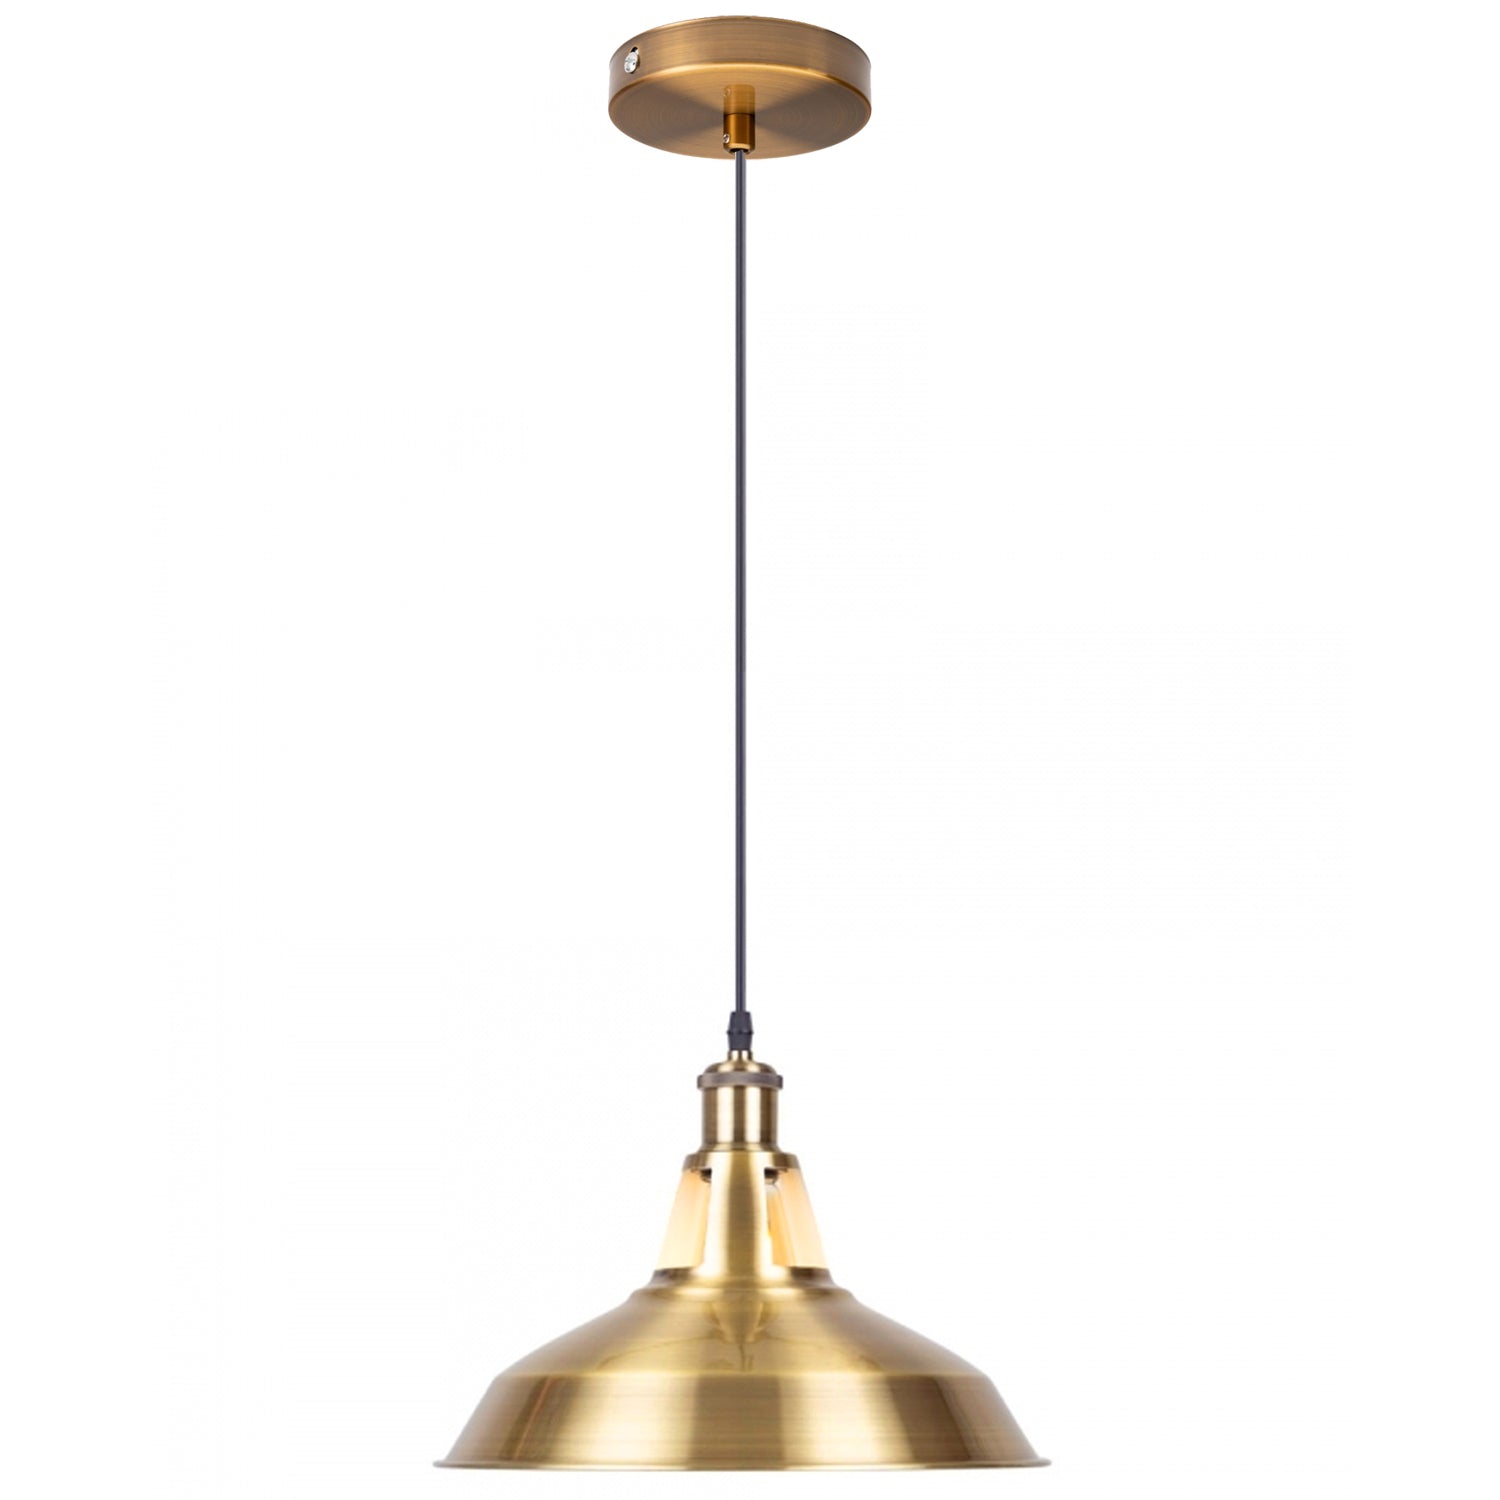 Yellow Brass Industrial Metal Ceiling Pendant Light Shade Modern Hanging Retro Lights